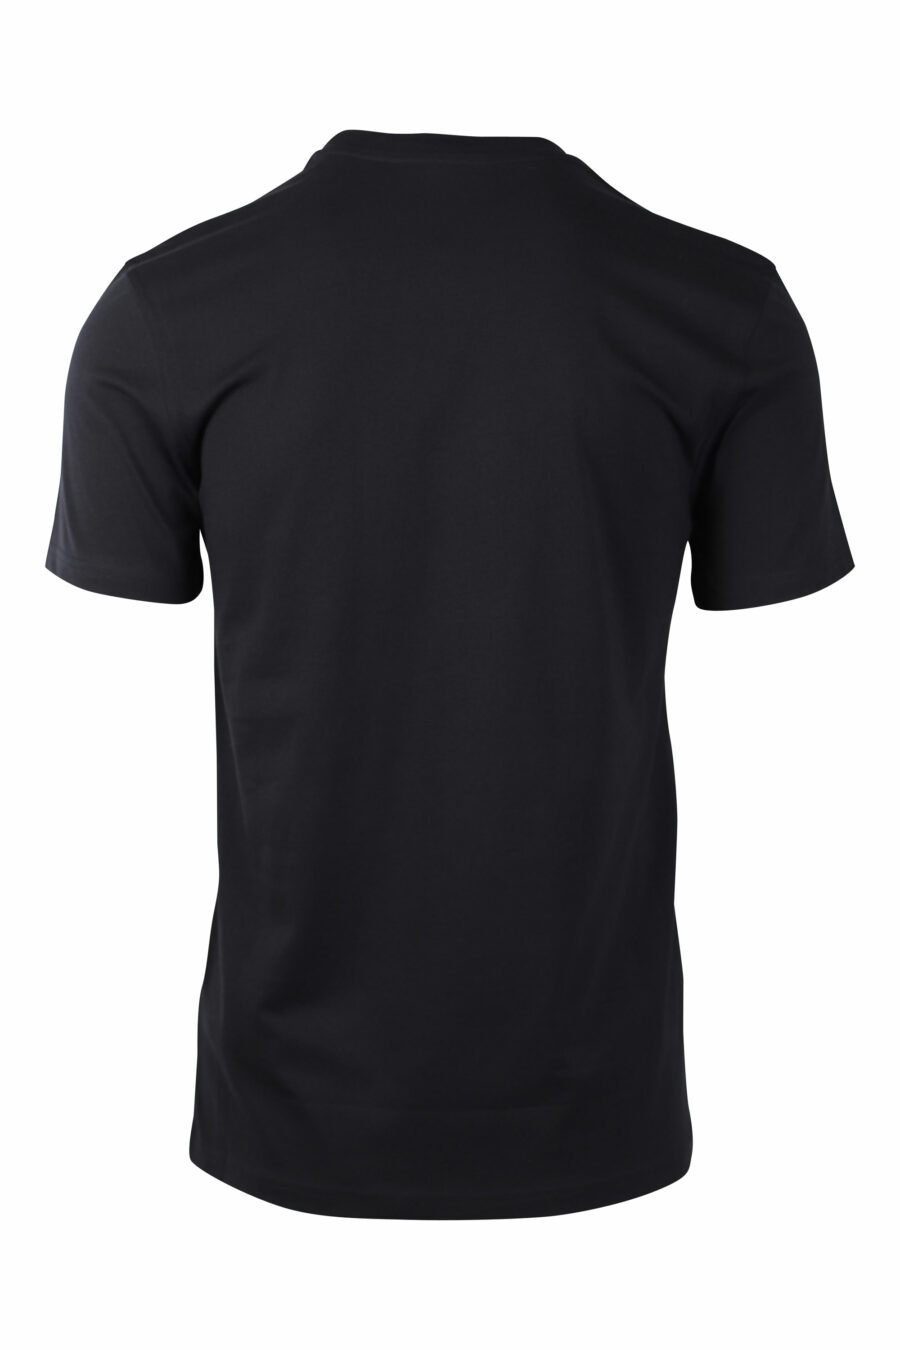 Schwarzes T-Shirt mit silbernem Maxilogo - IMG 1468